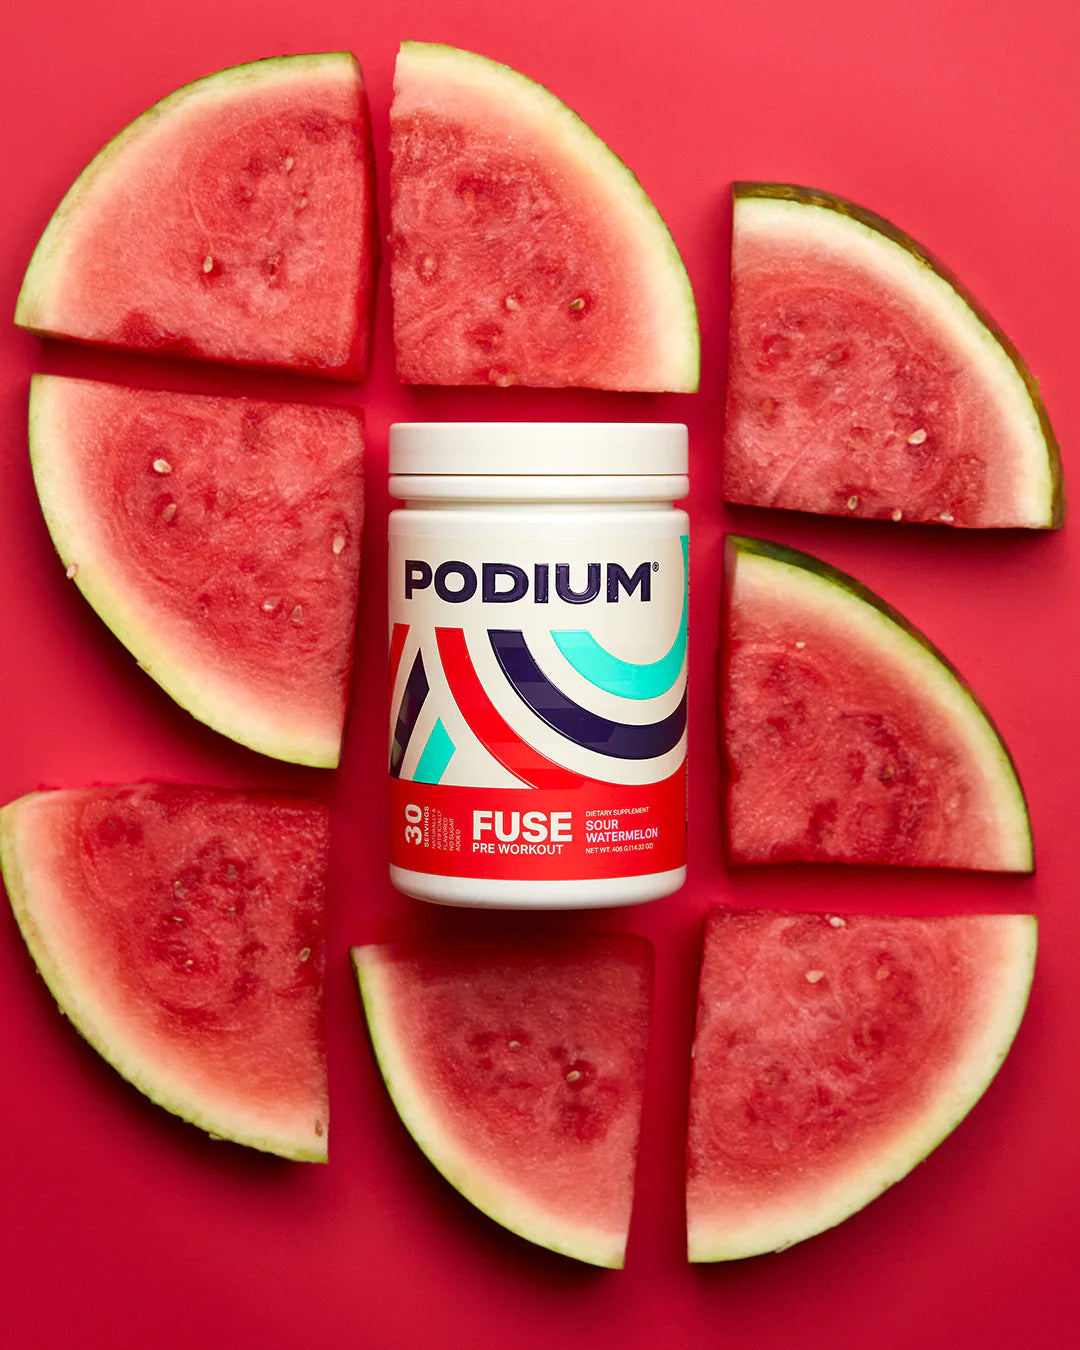 Podium Fuse Sour Watermelon